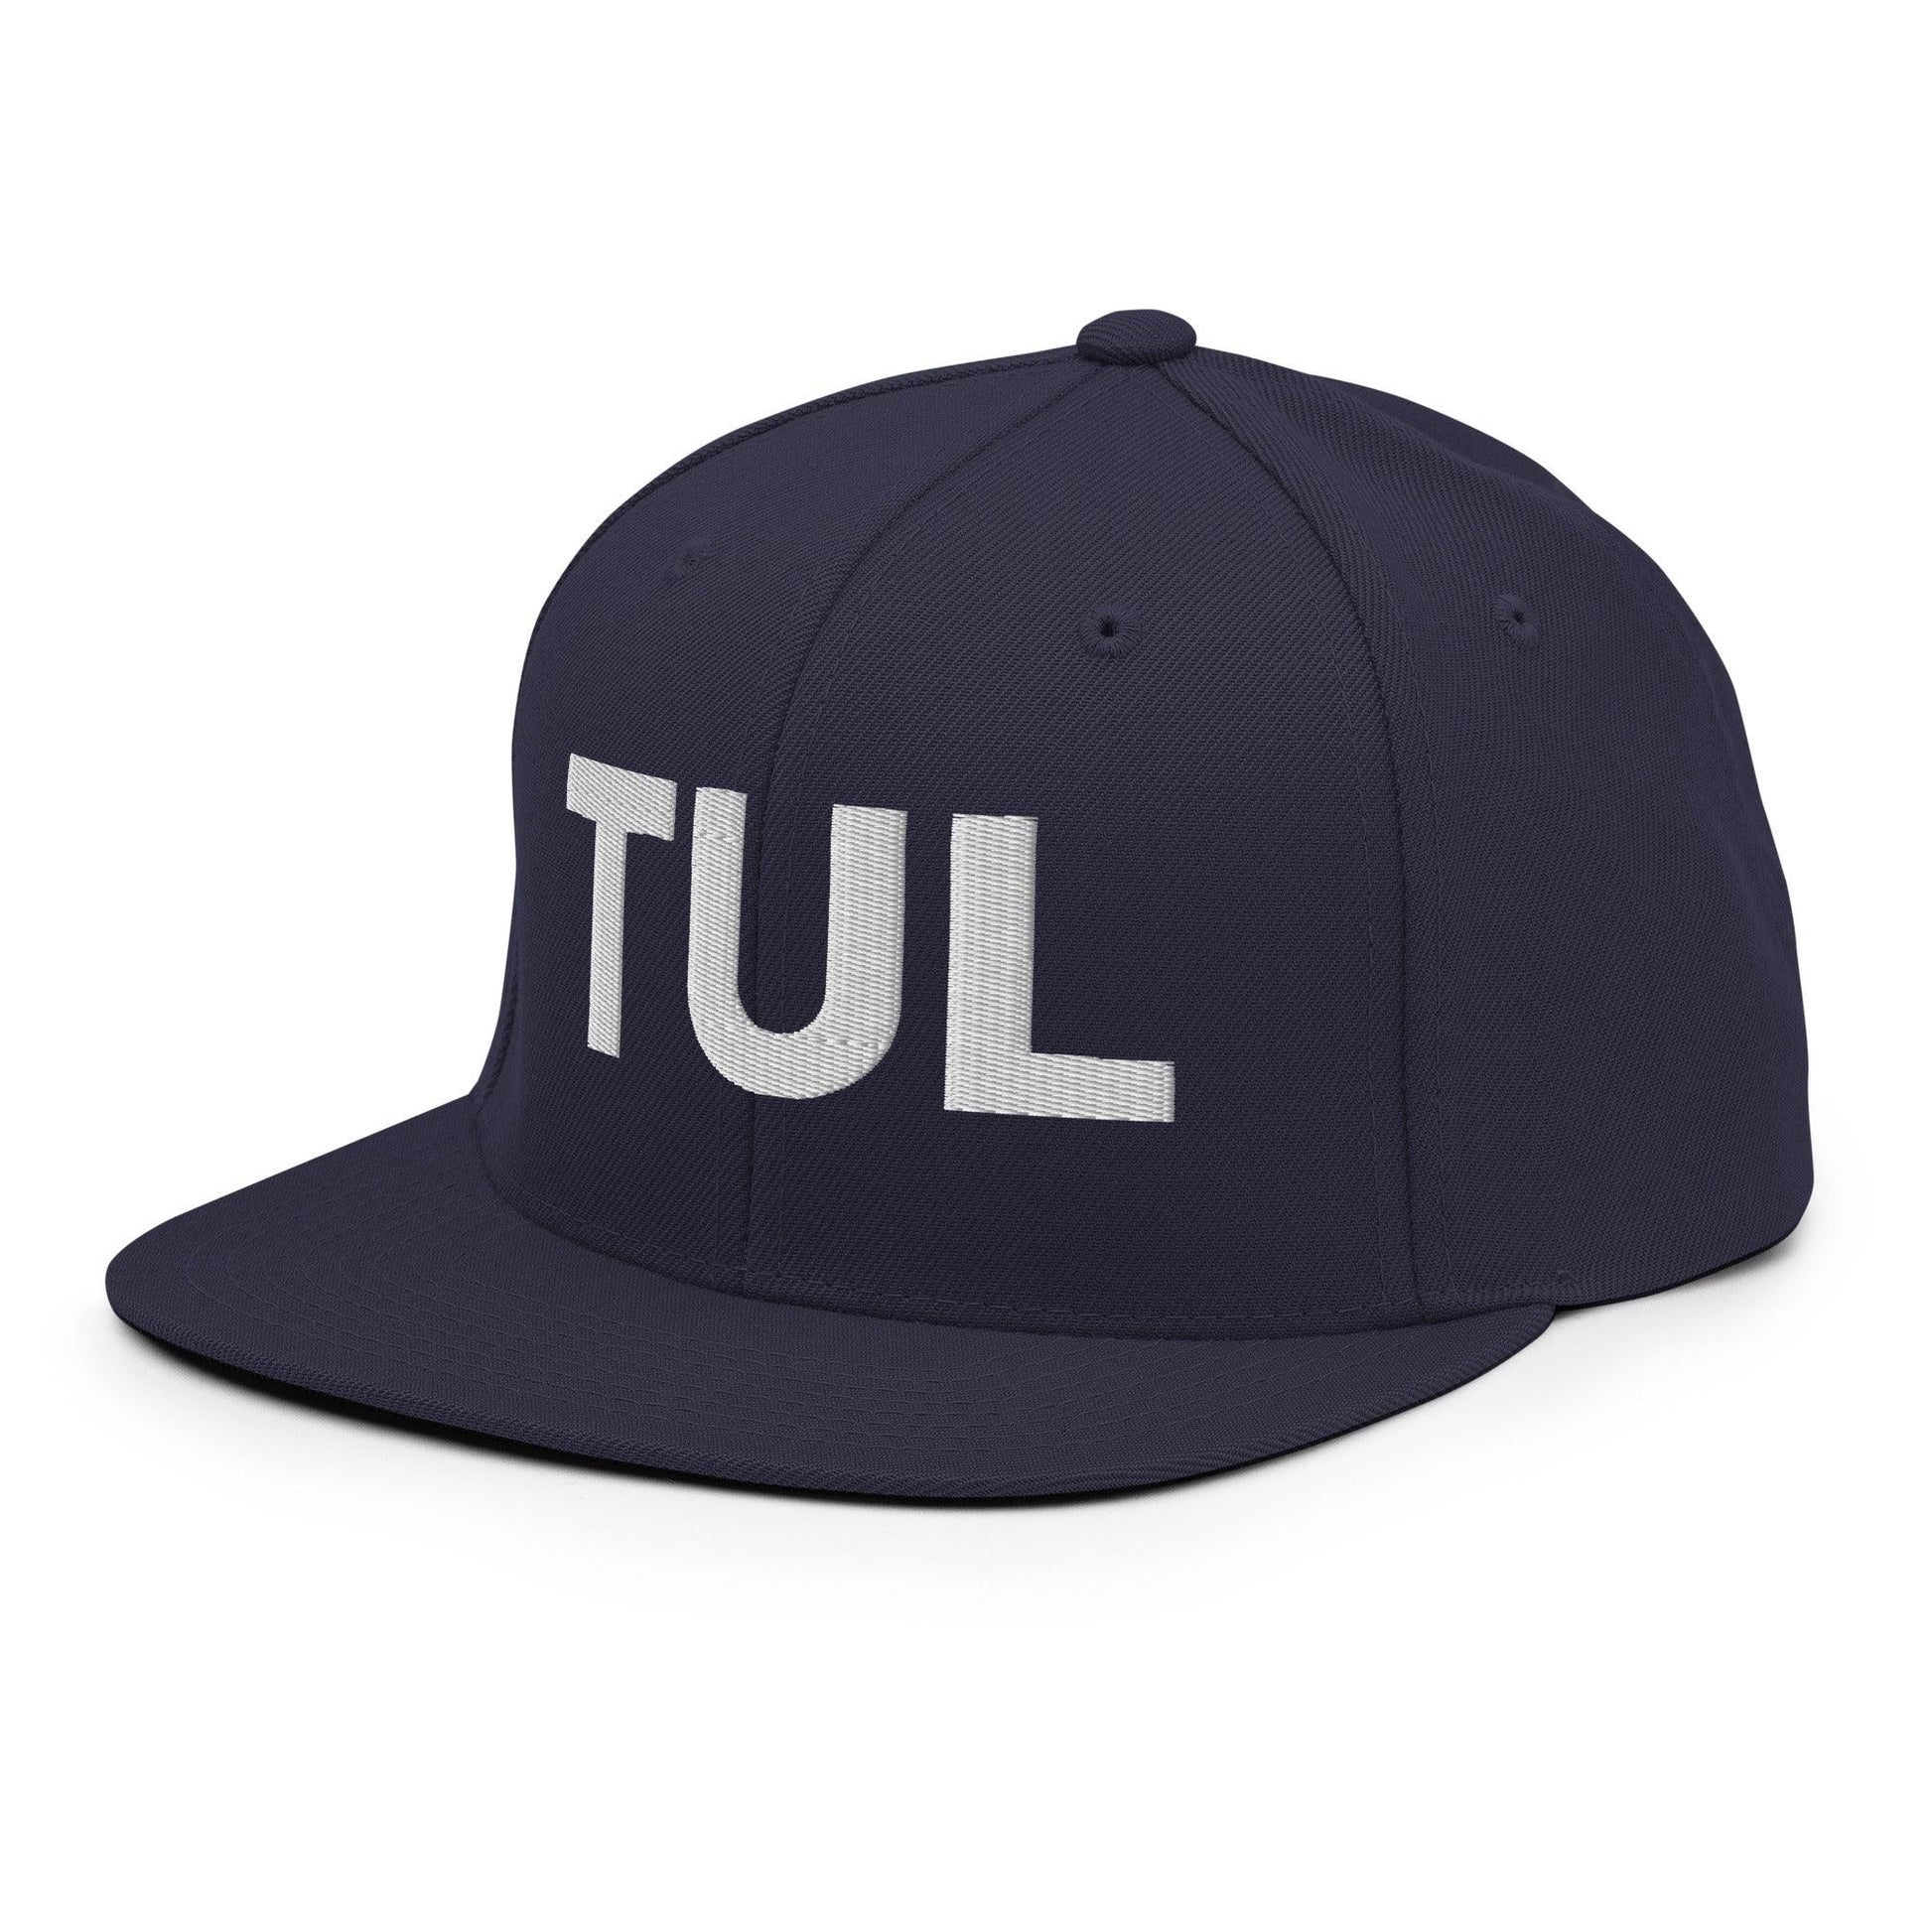 Tulsa TUL Vintage Block Snapback Hat Navy